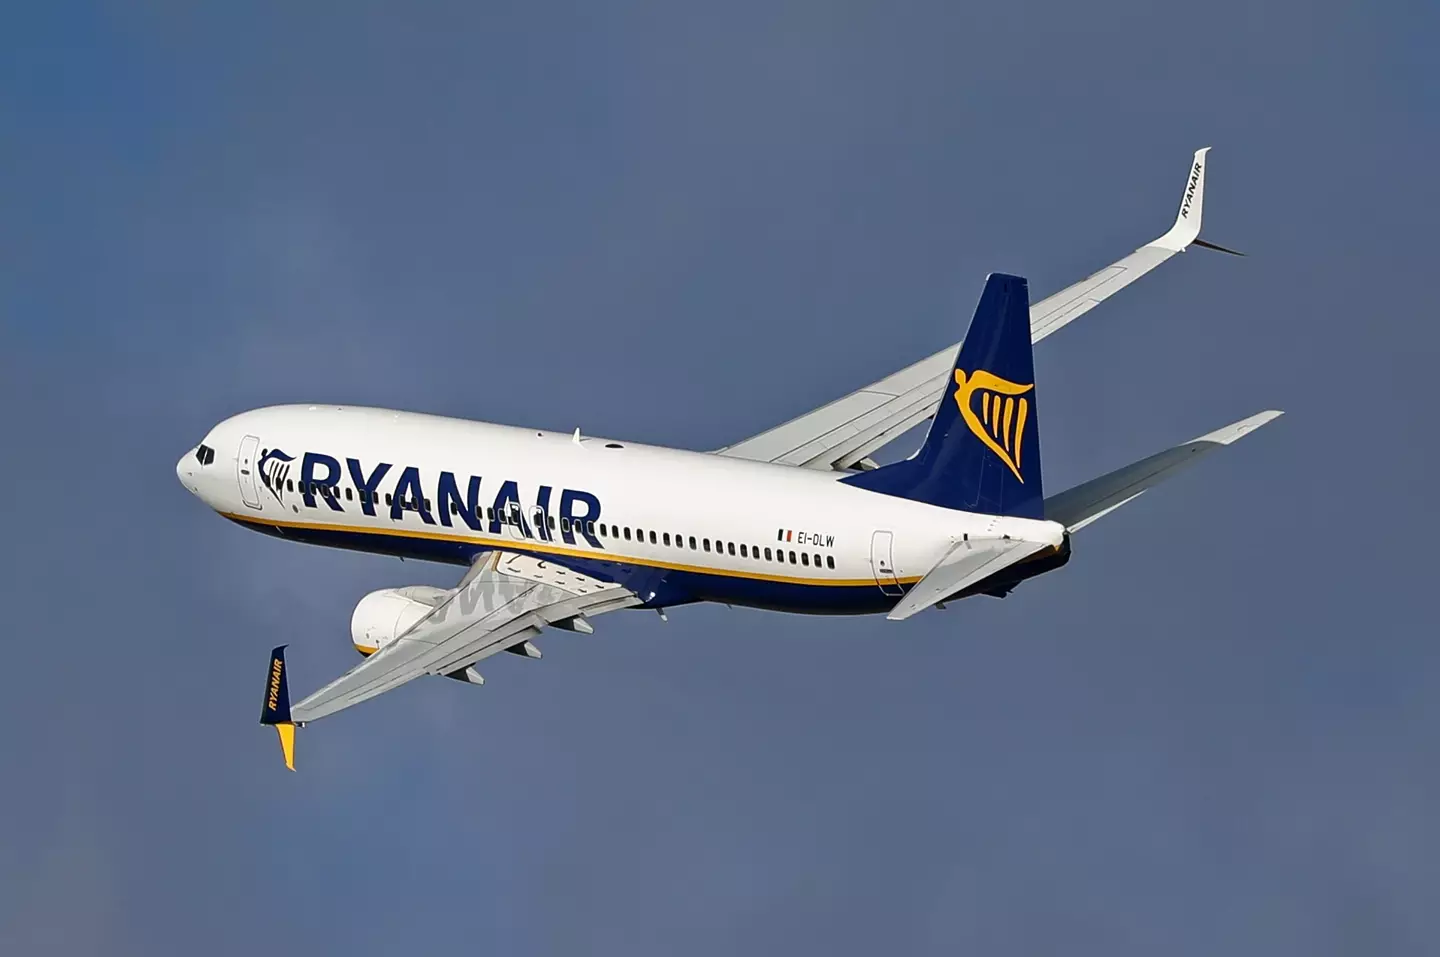 Ryanair offers cheap flights across Europe.